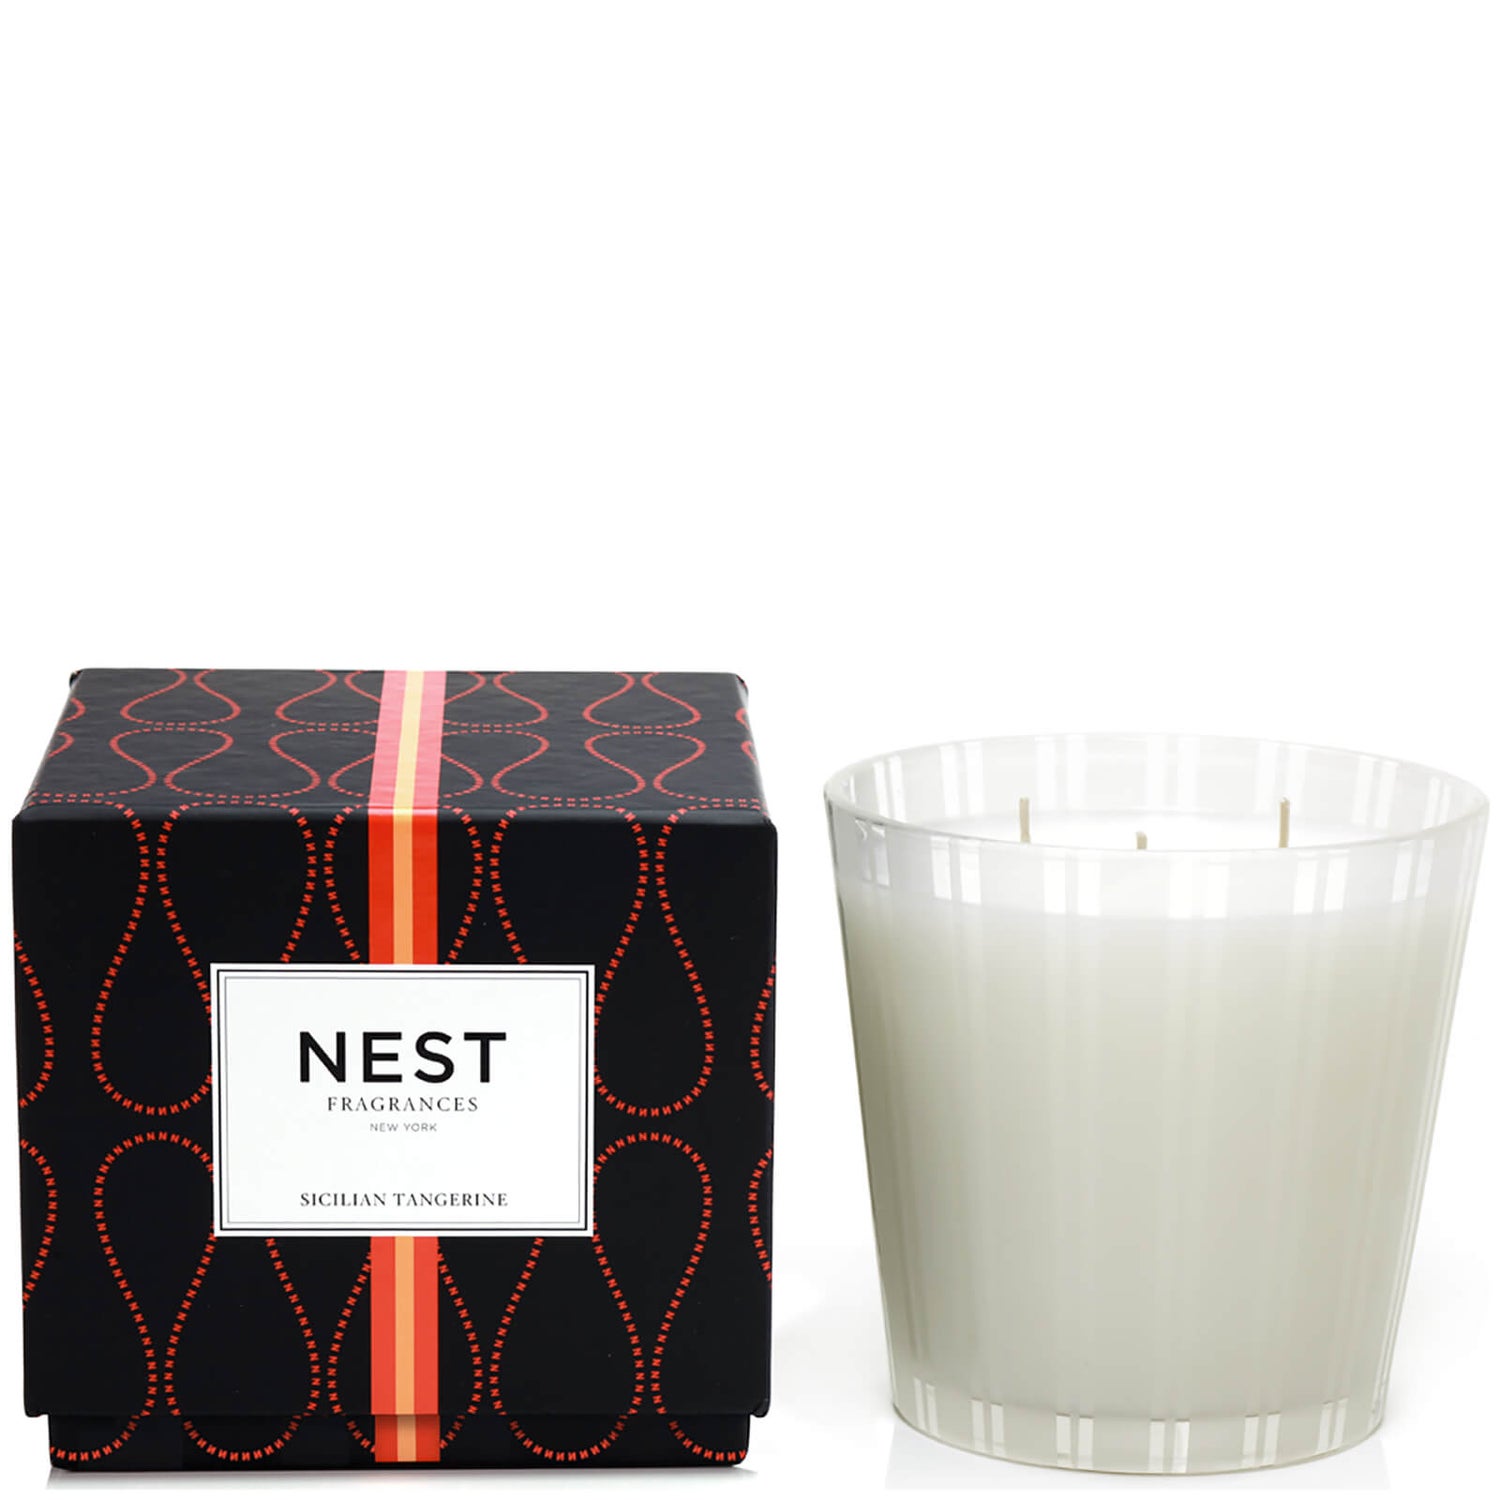 NEST Fragrances Sicilian Tangerine 3-Wick Candle